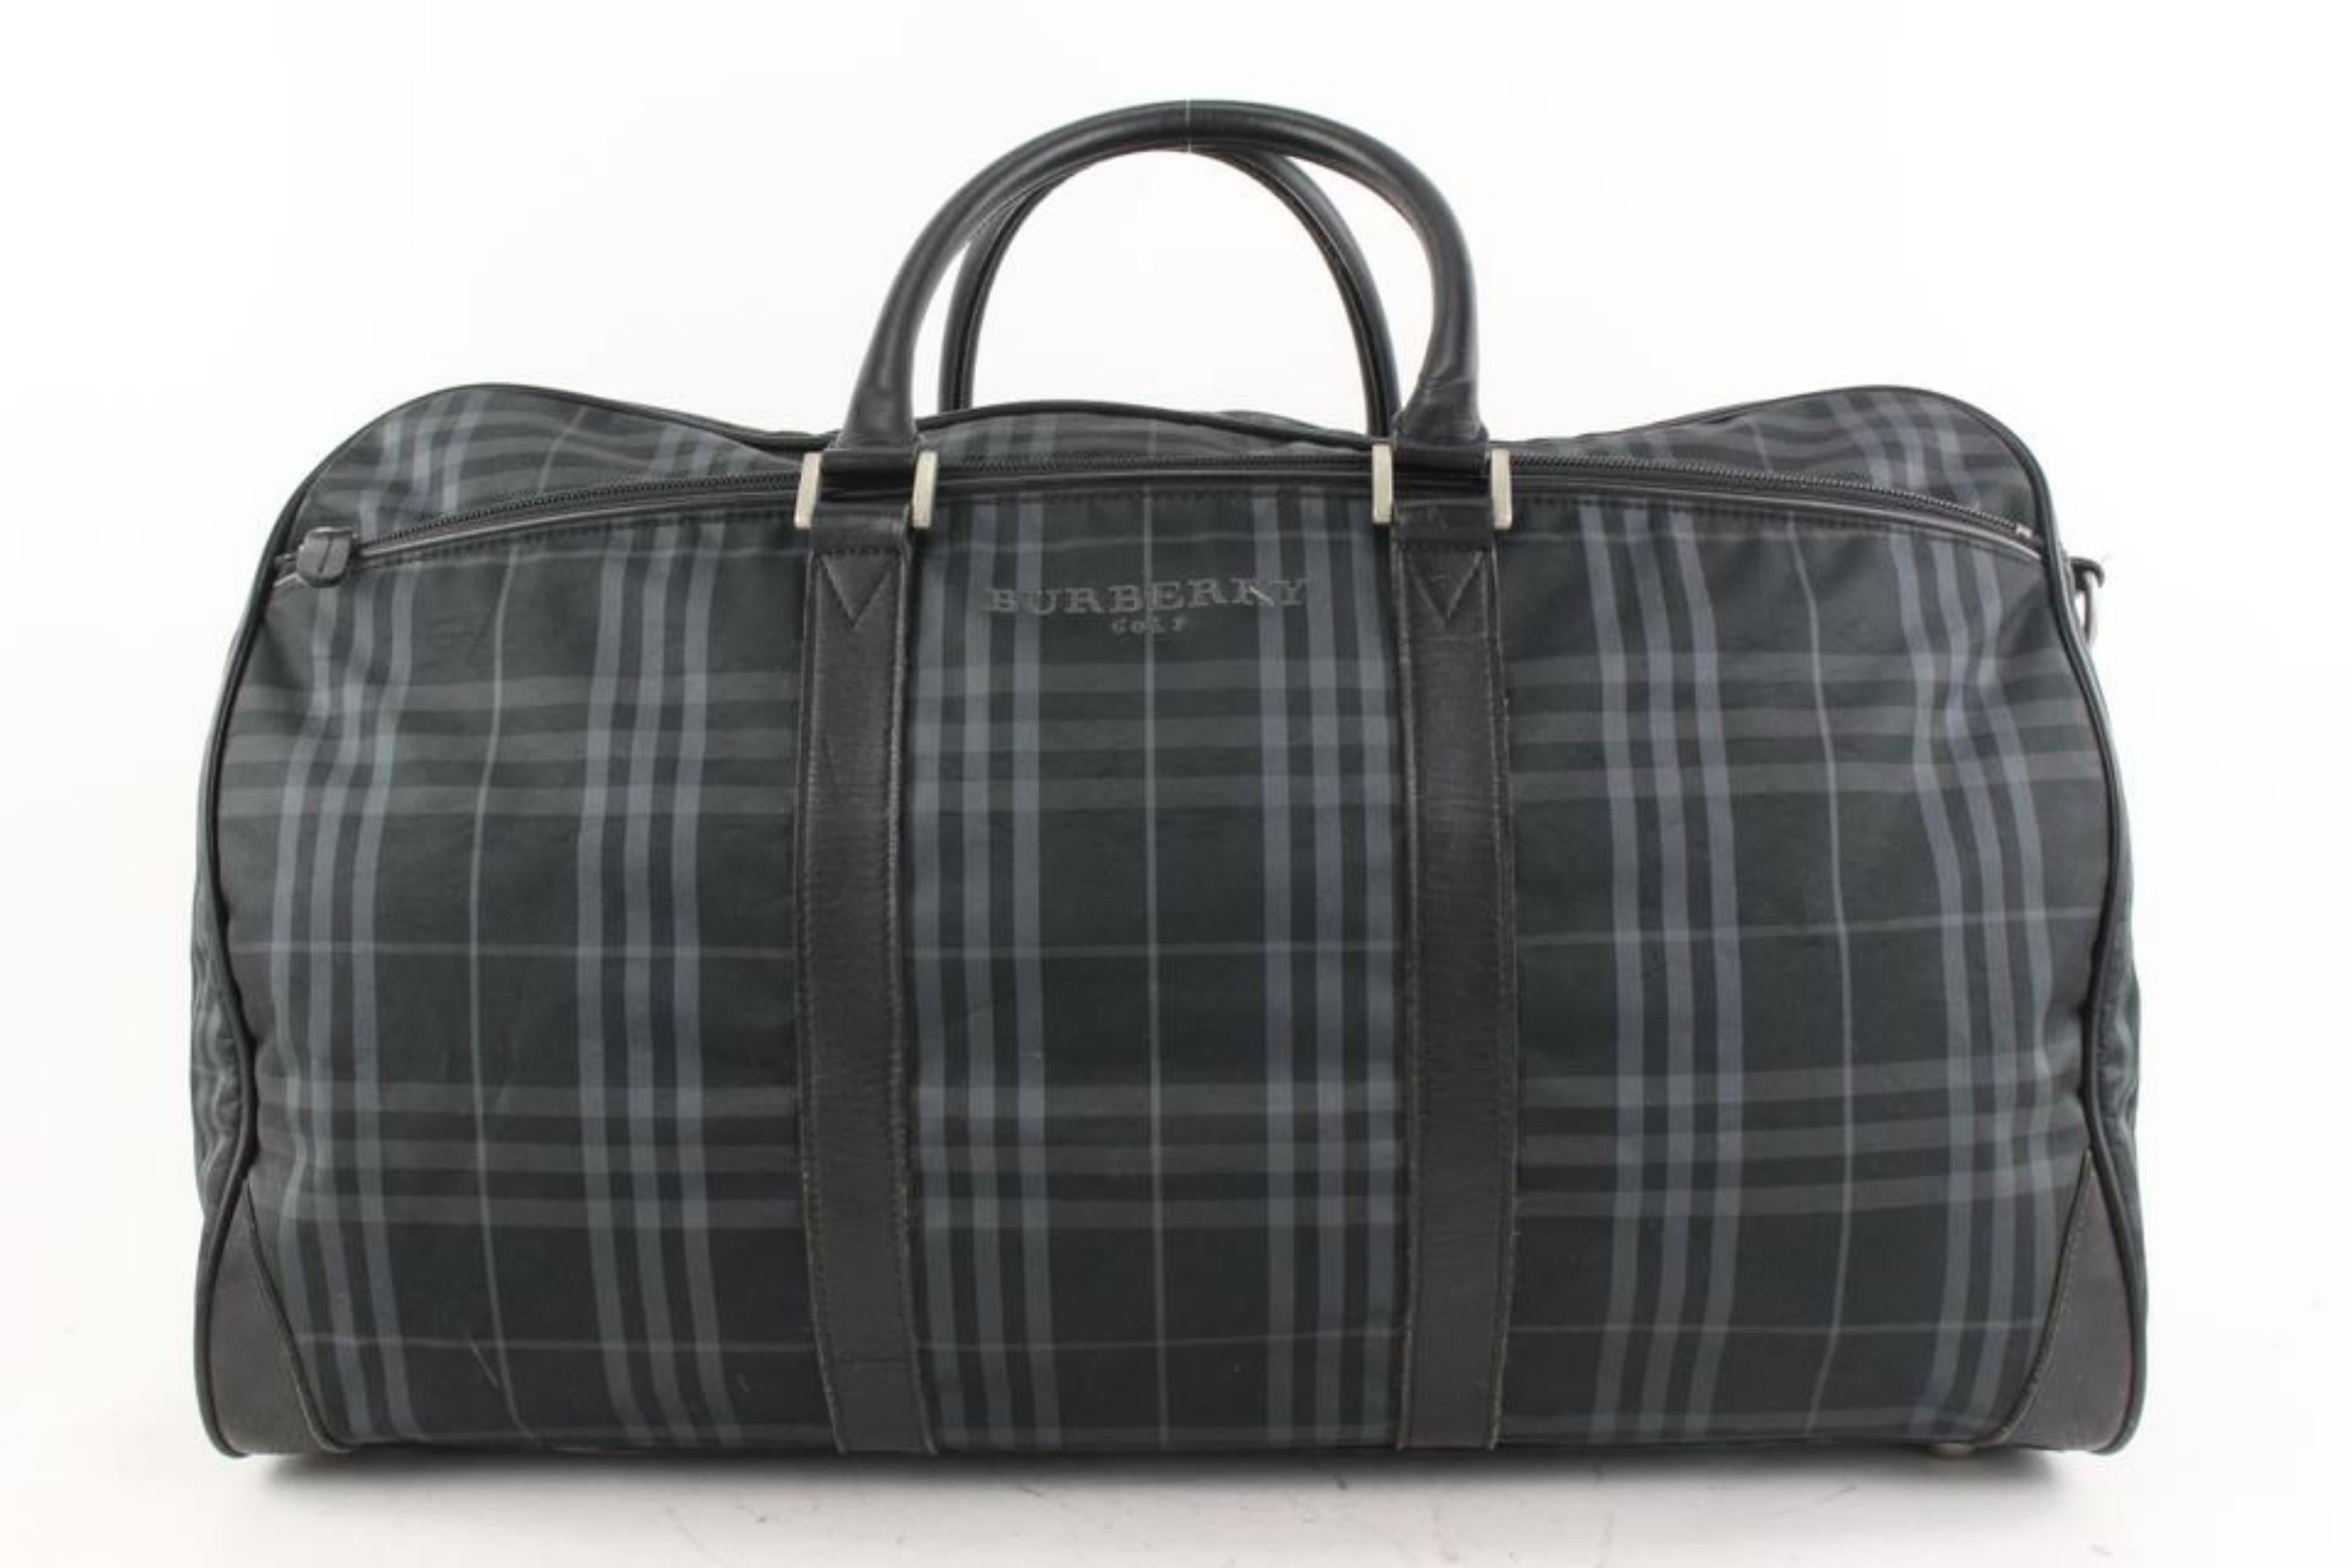 Burberry Black Nova Check Boston Duffle Bag with Strap 1BUR119
Measurements: Length:  19.5